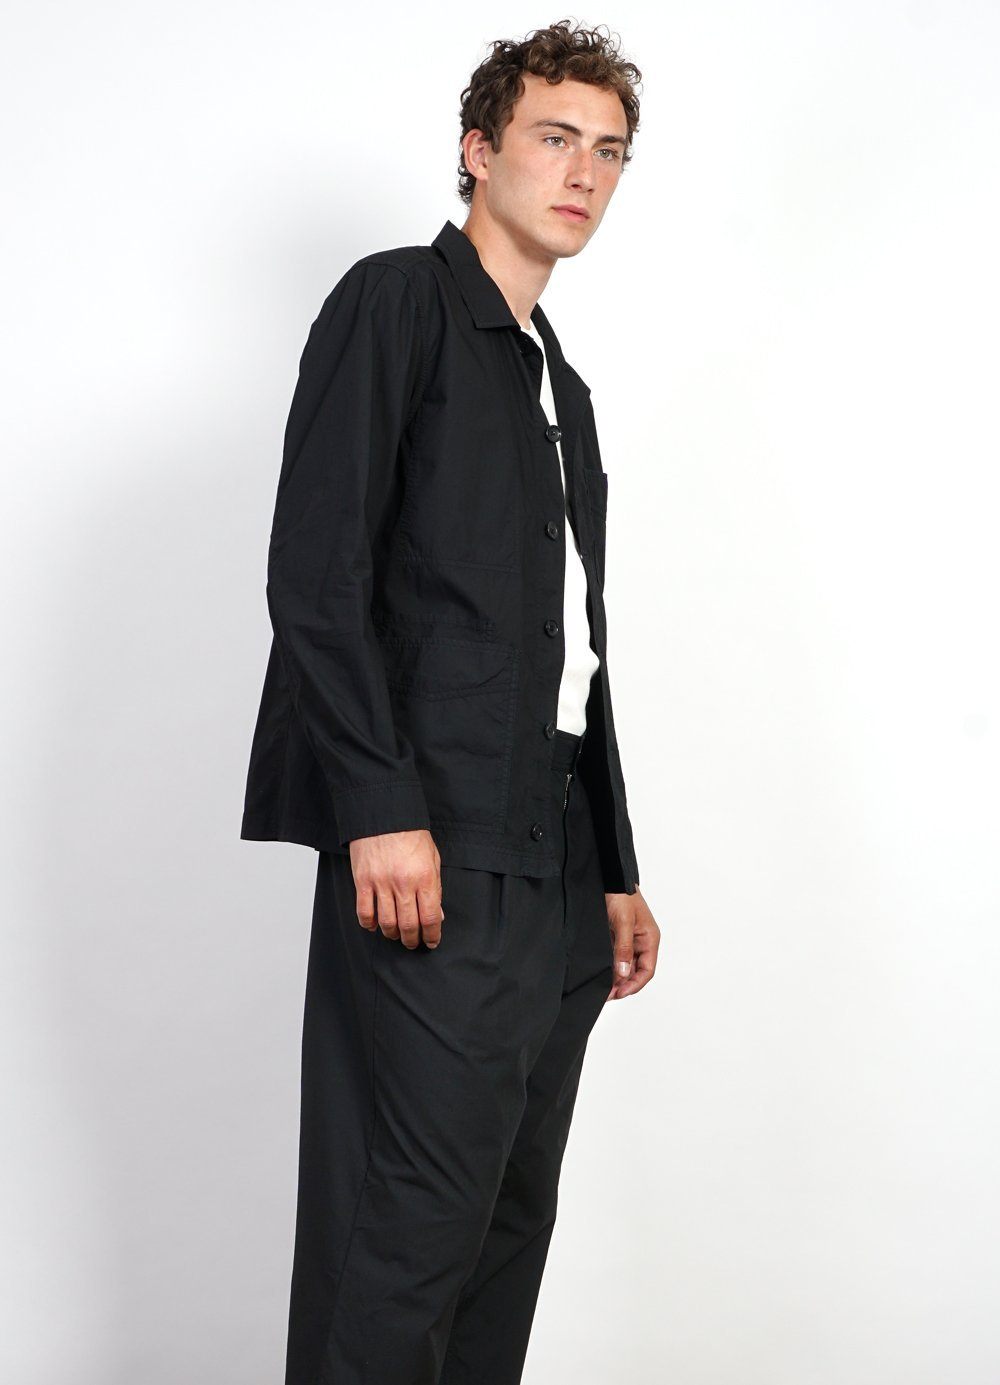 ANDERS | Light Work Jacket | Black -HANSEN Garments- HANSEN Garments